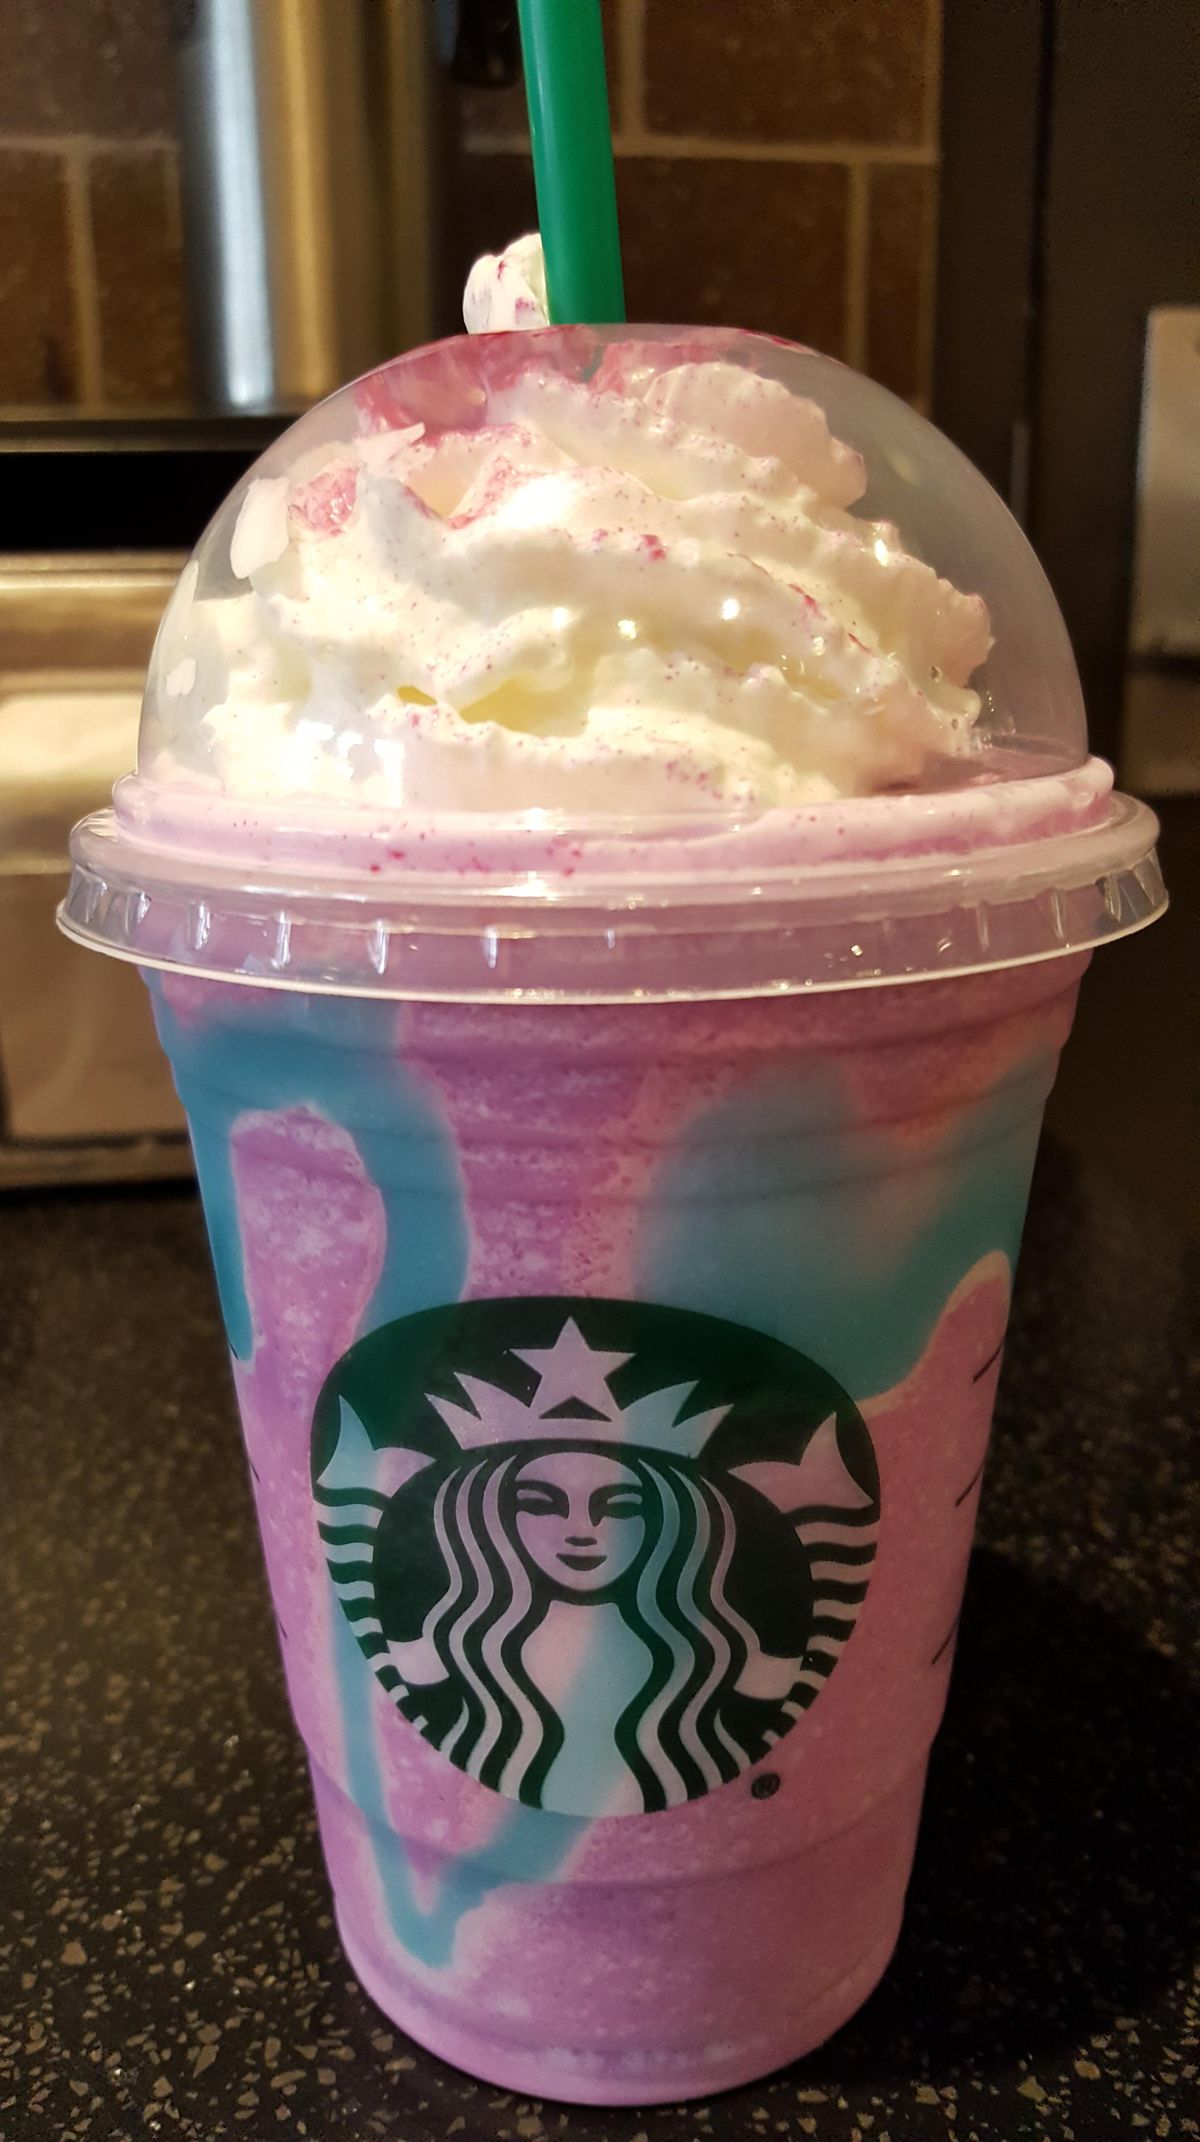 Drinking the rainbow: Starbucks’ Unicorn Frappuccino may make you see